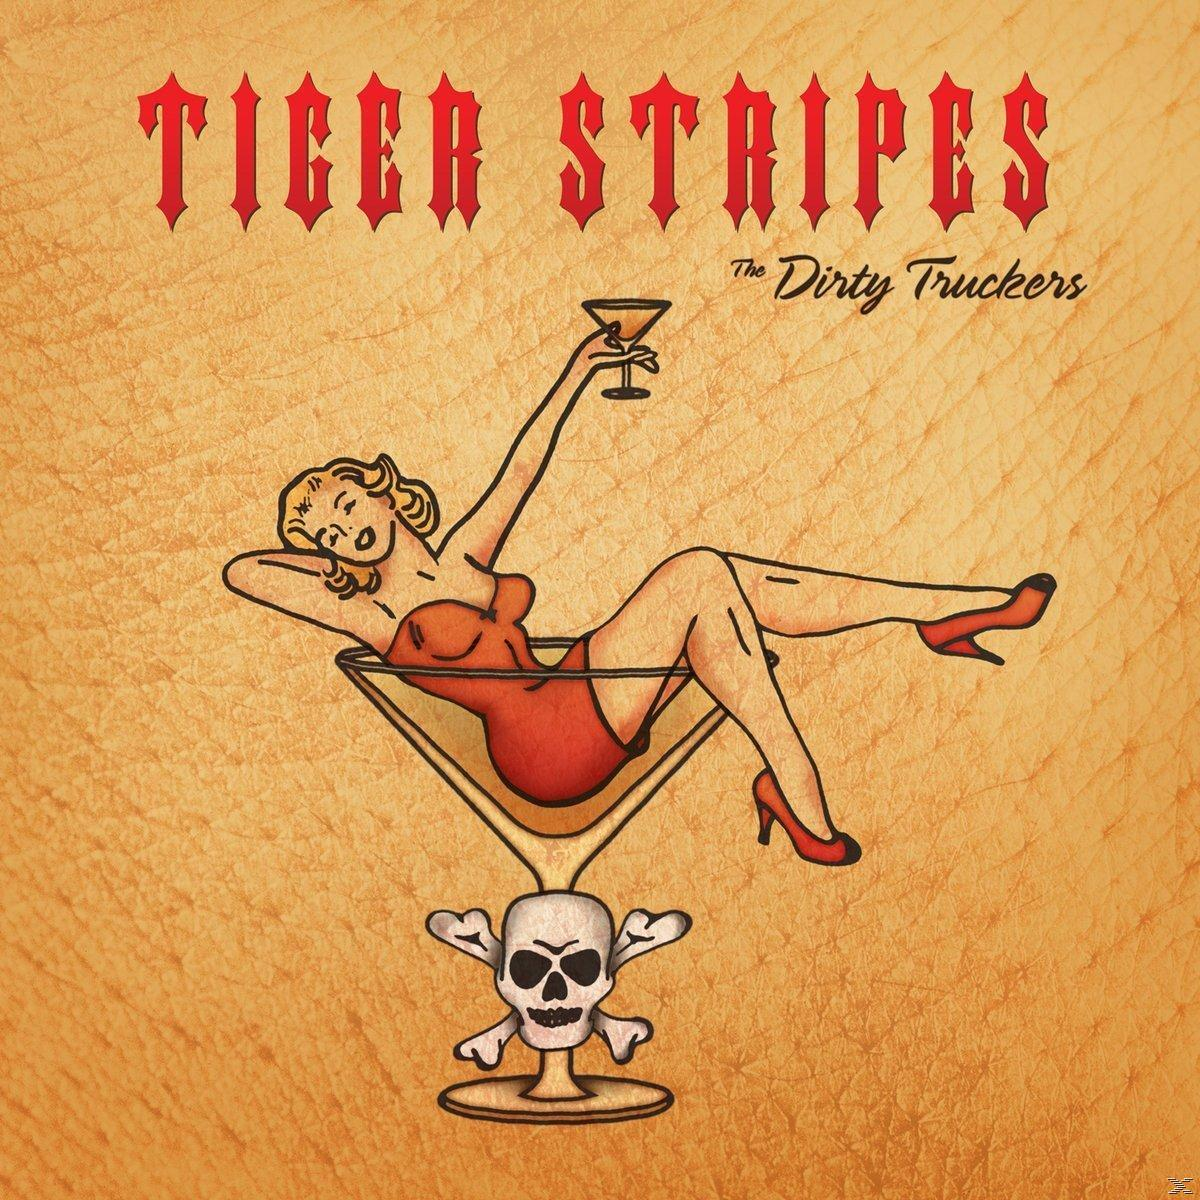 The Dirty Truckers - TIGER STRIPES - (+DD) (Vinyl)